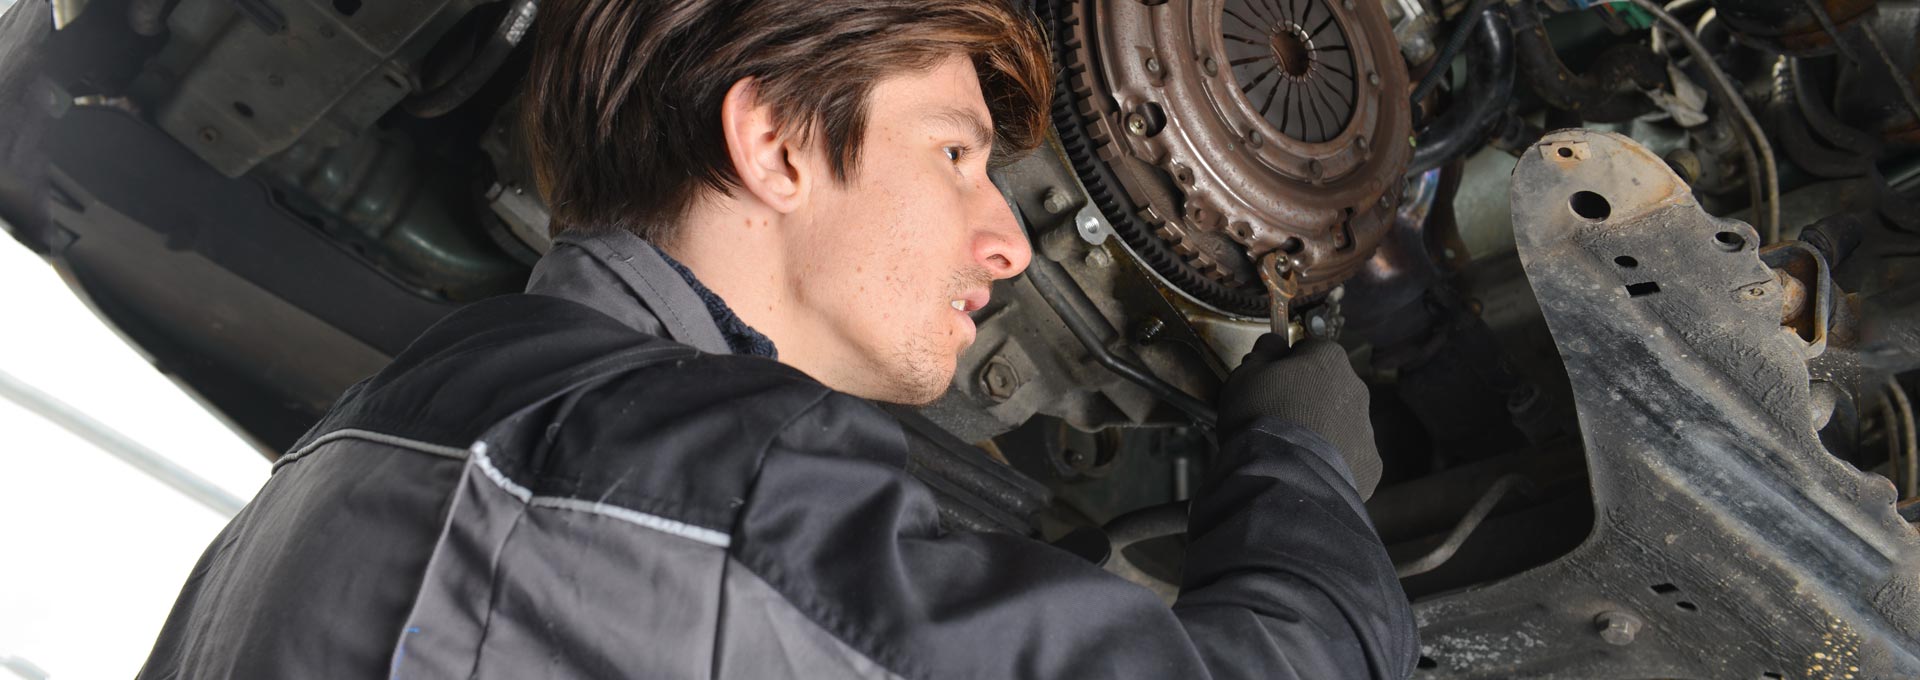 Mechanic Repairing a Car Engine